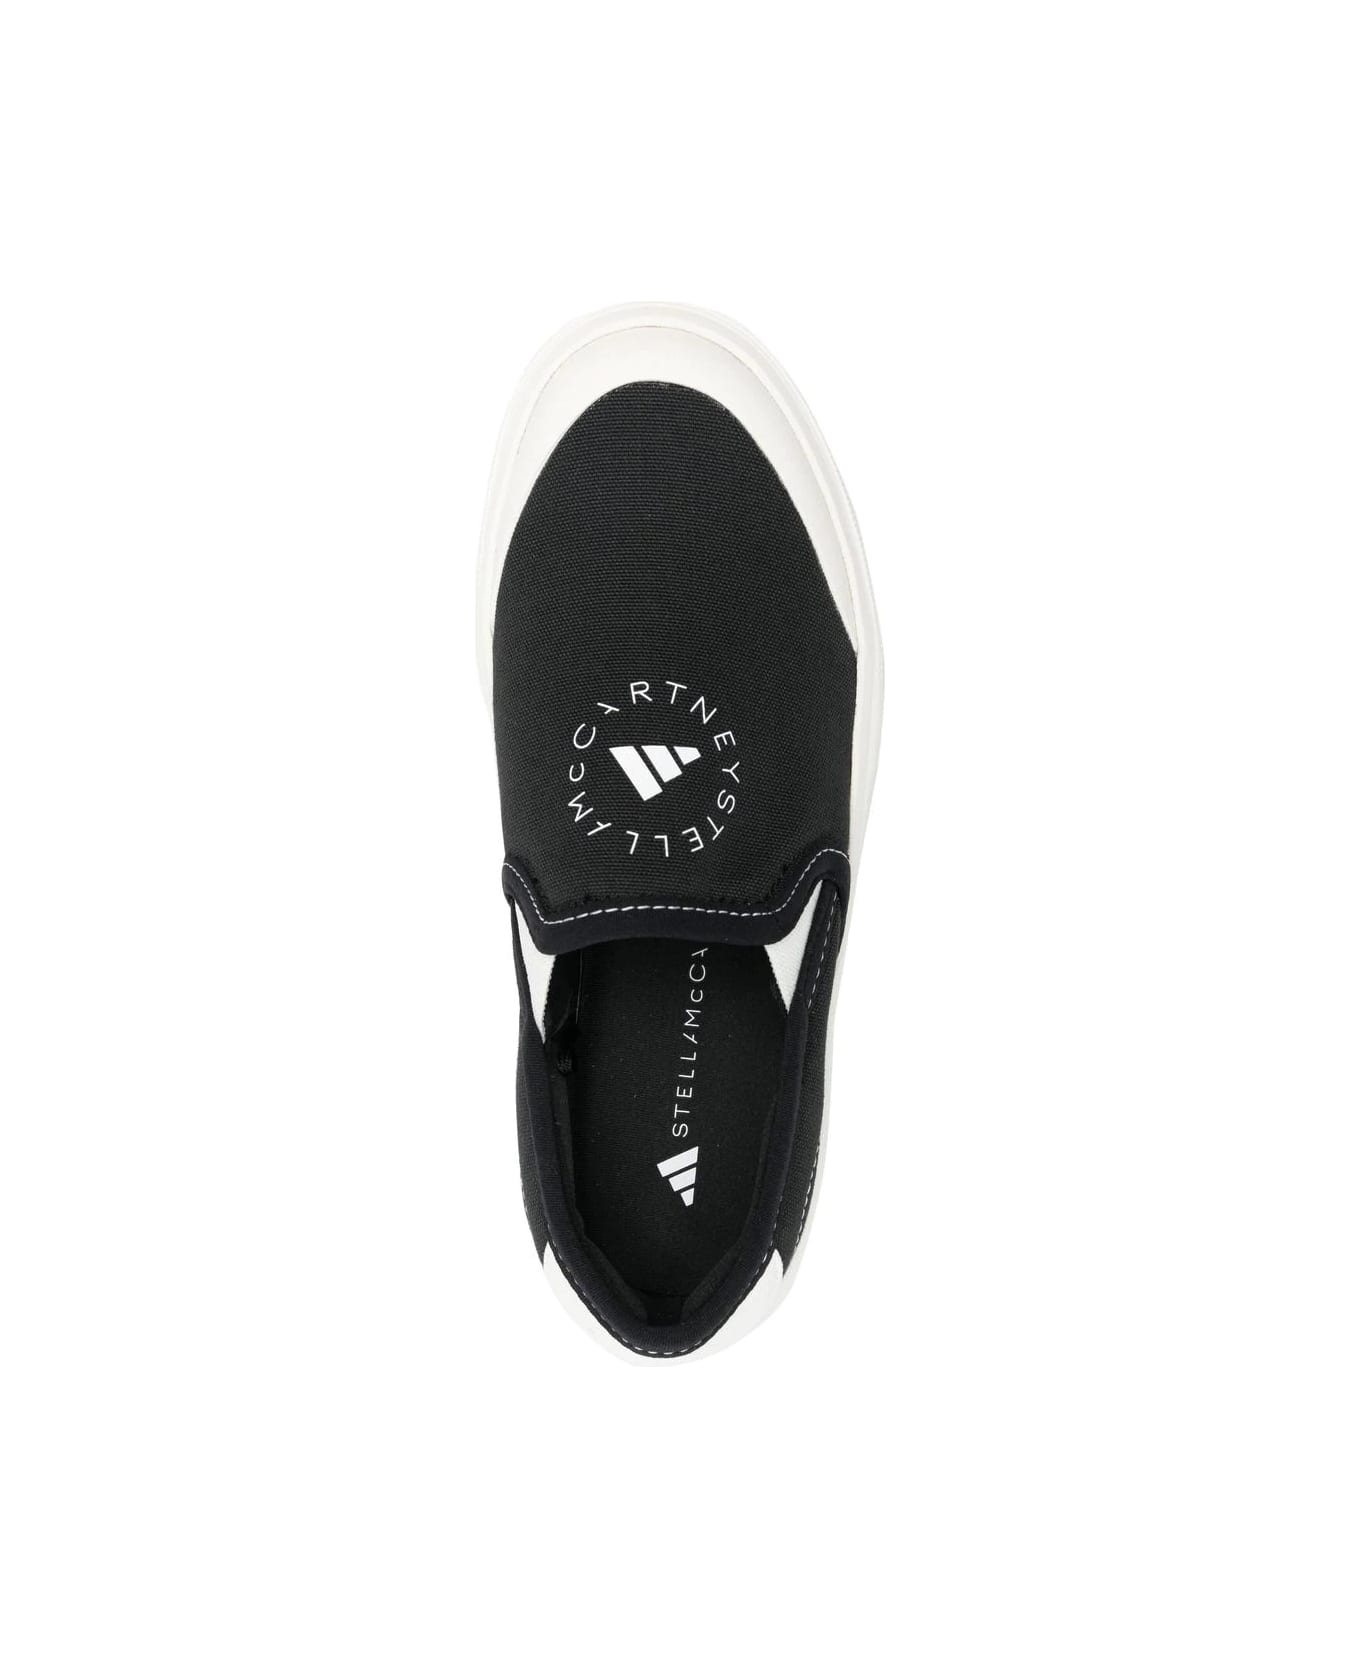 Adidas by Stella McCartney Asmc Court Slip On - Cblack Owhite Ftwwht サンダル